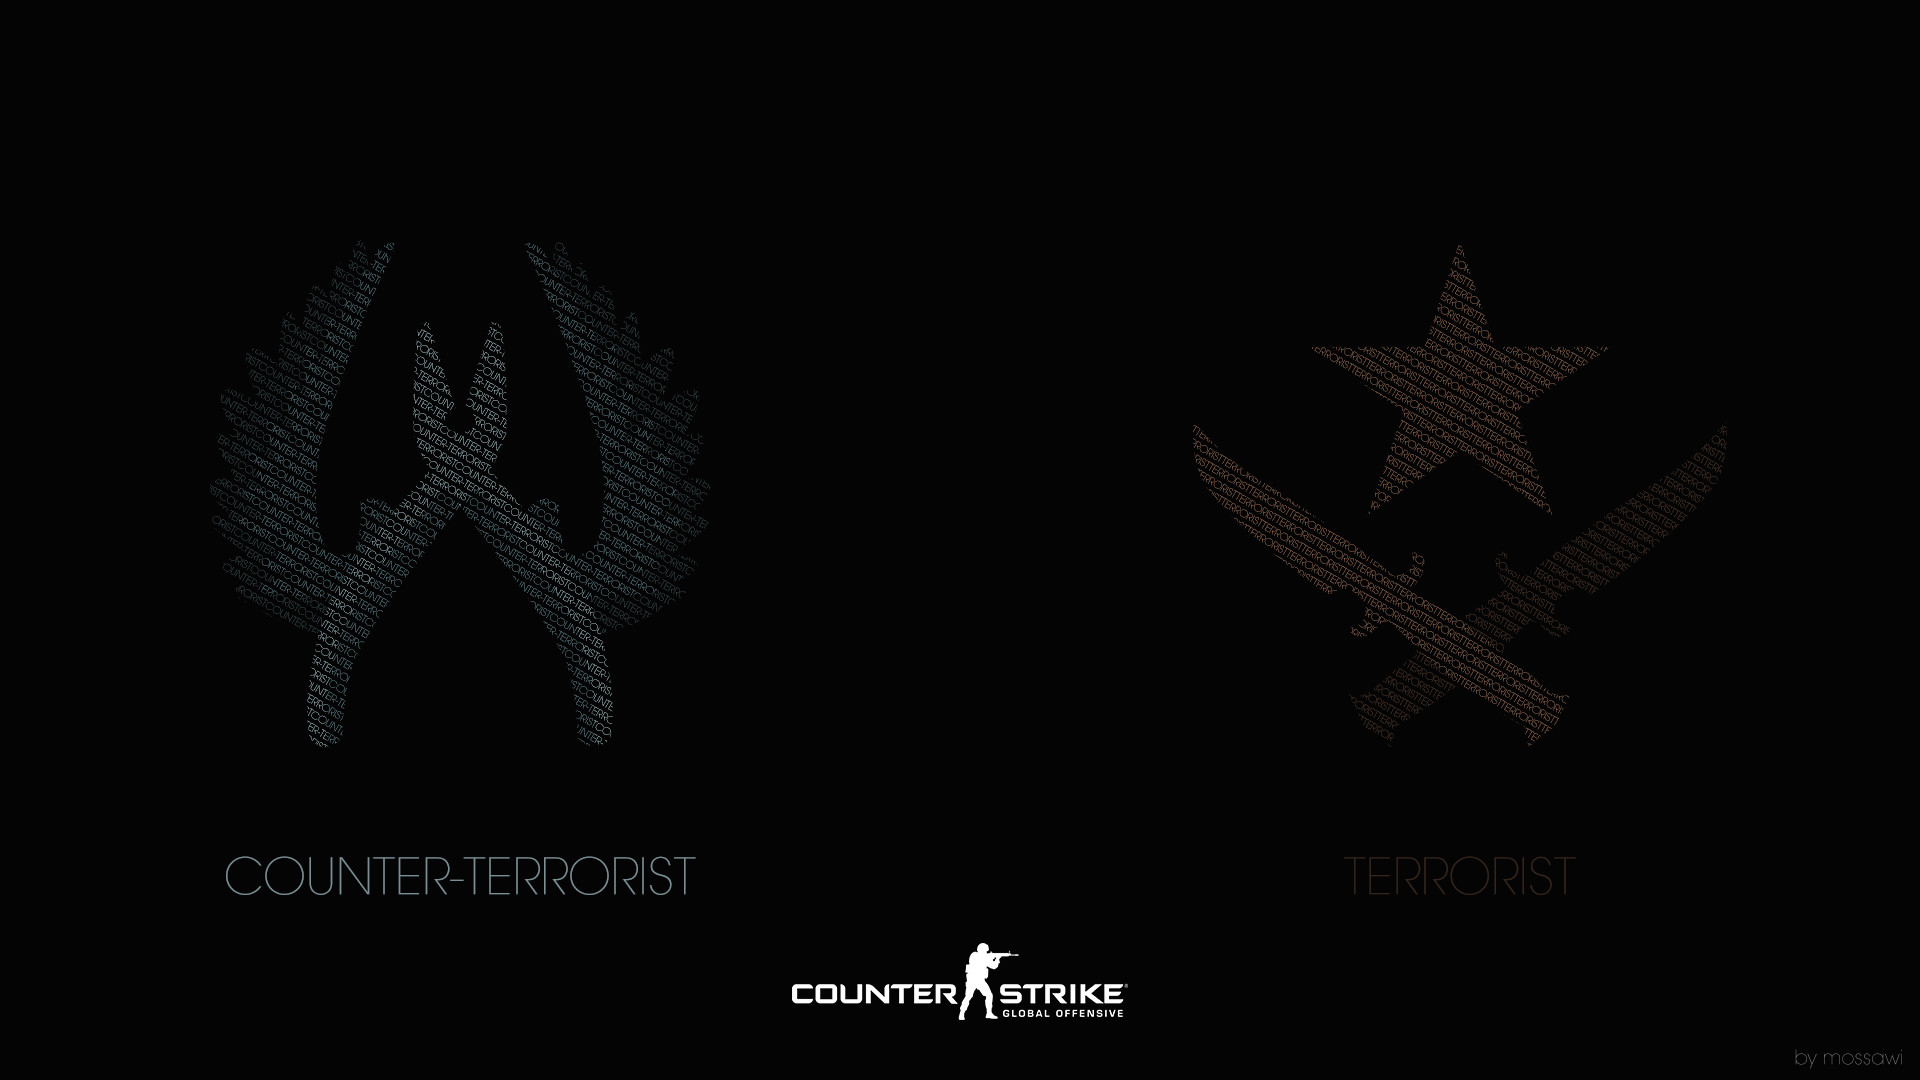 1920x1080 1080p. Counter-terrorist versus Terrorist